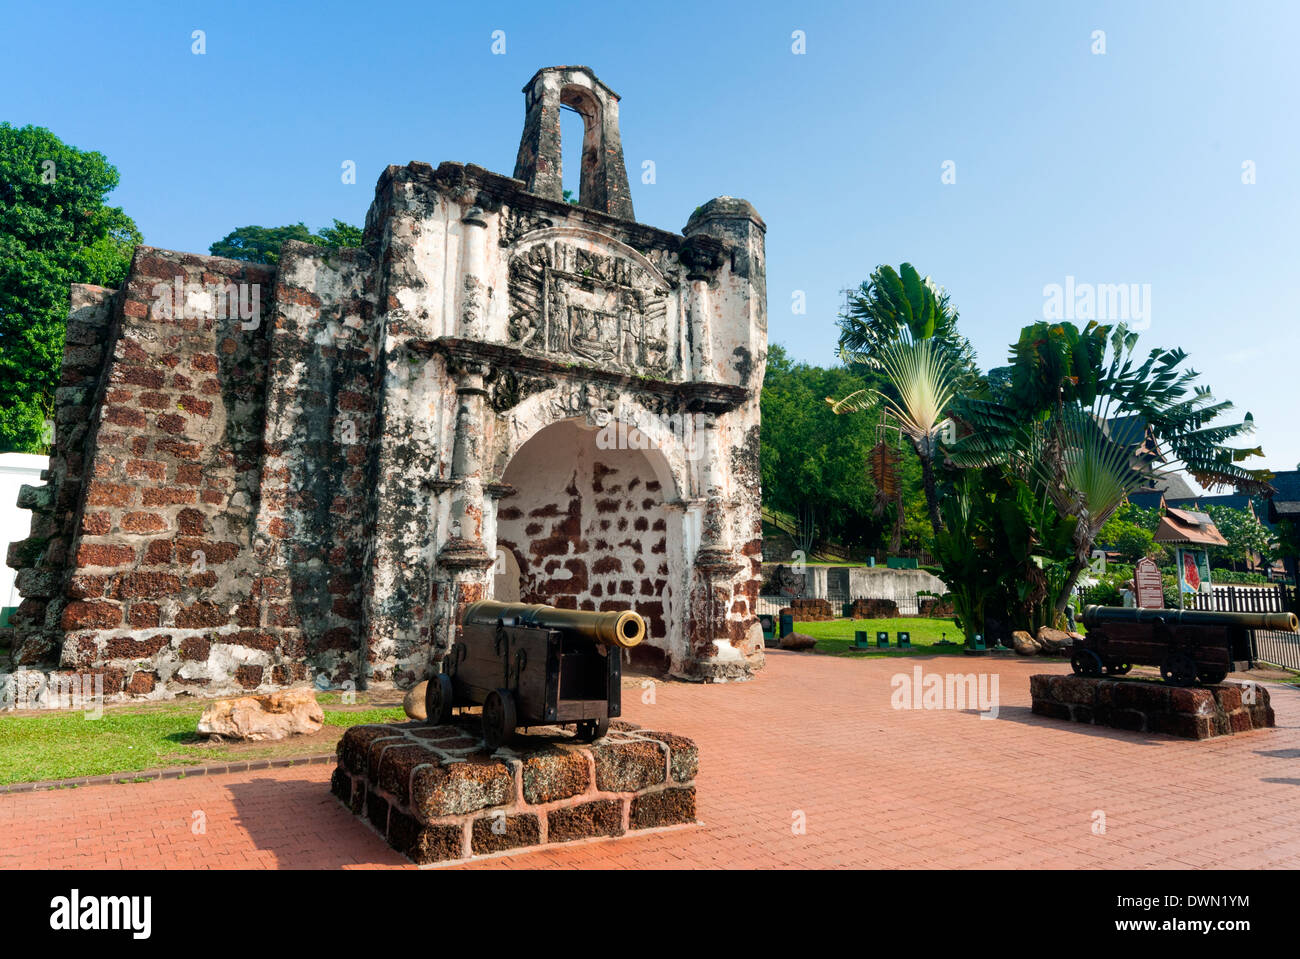 Porta de Santiago, Pintu Gerbang Santiago, Melaka (Malacca), il Sito Patrimonio Mondiale dell'UNESCO, Melaka Membro, Malaysia, sud-est asiatico Foto Stock